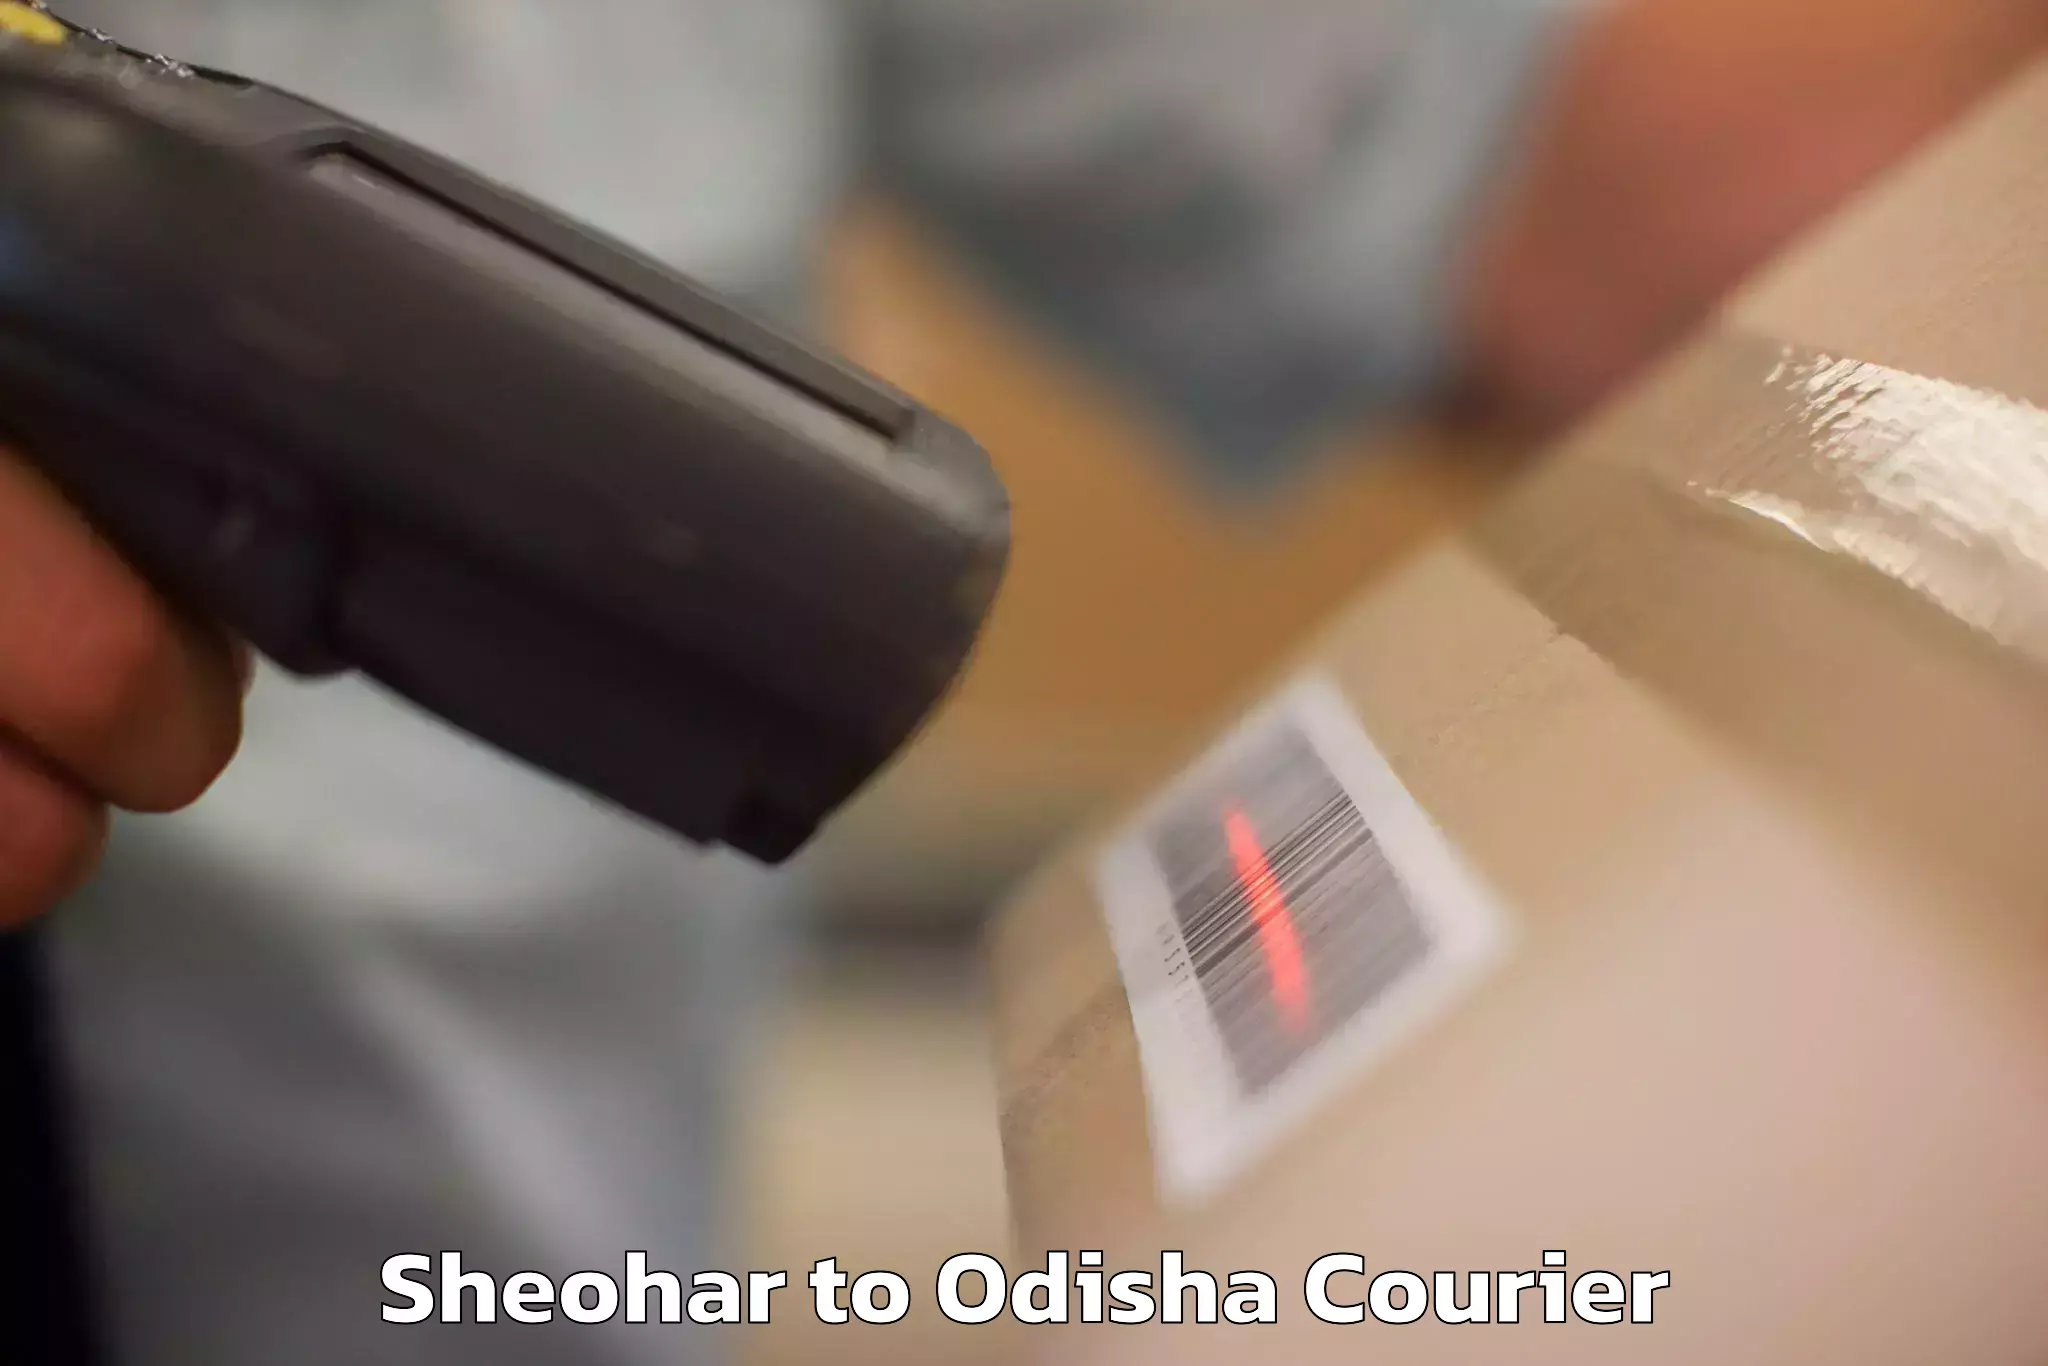 Door-to-door baggage service Sheohar to Udala